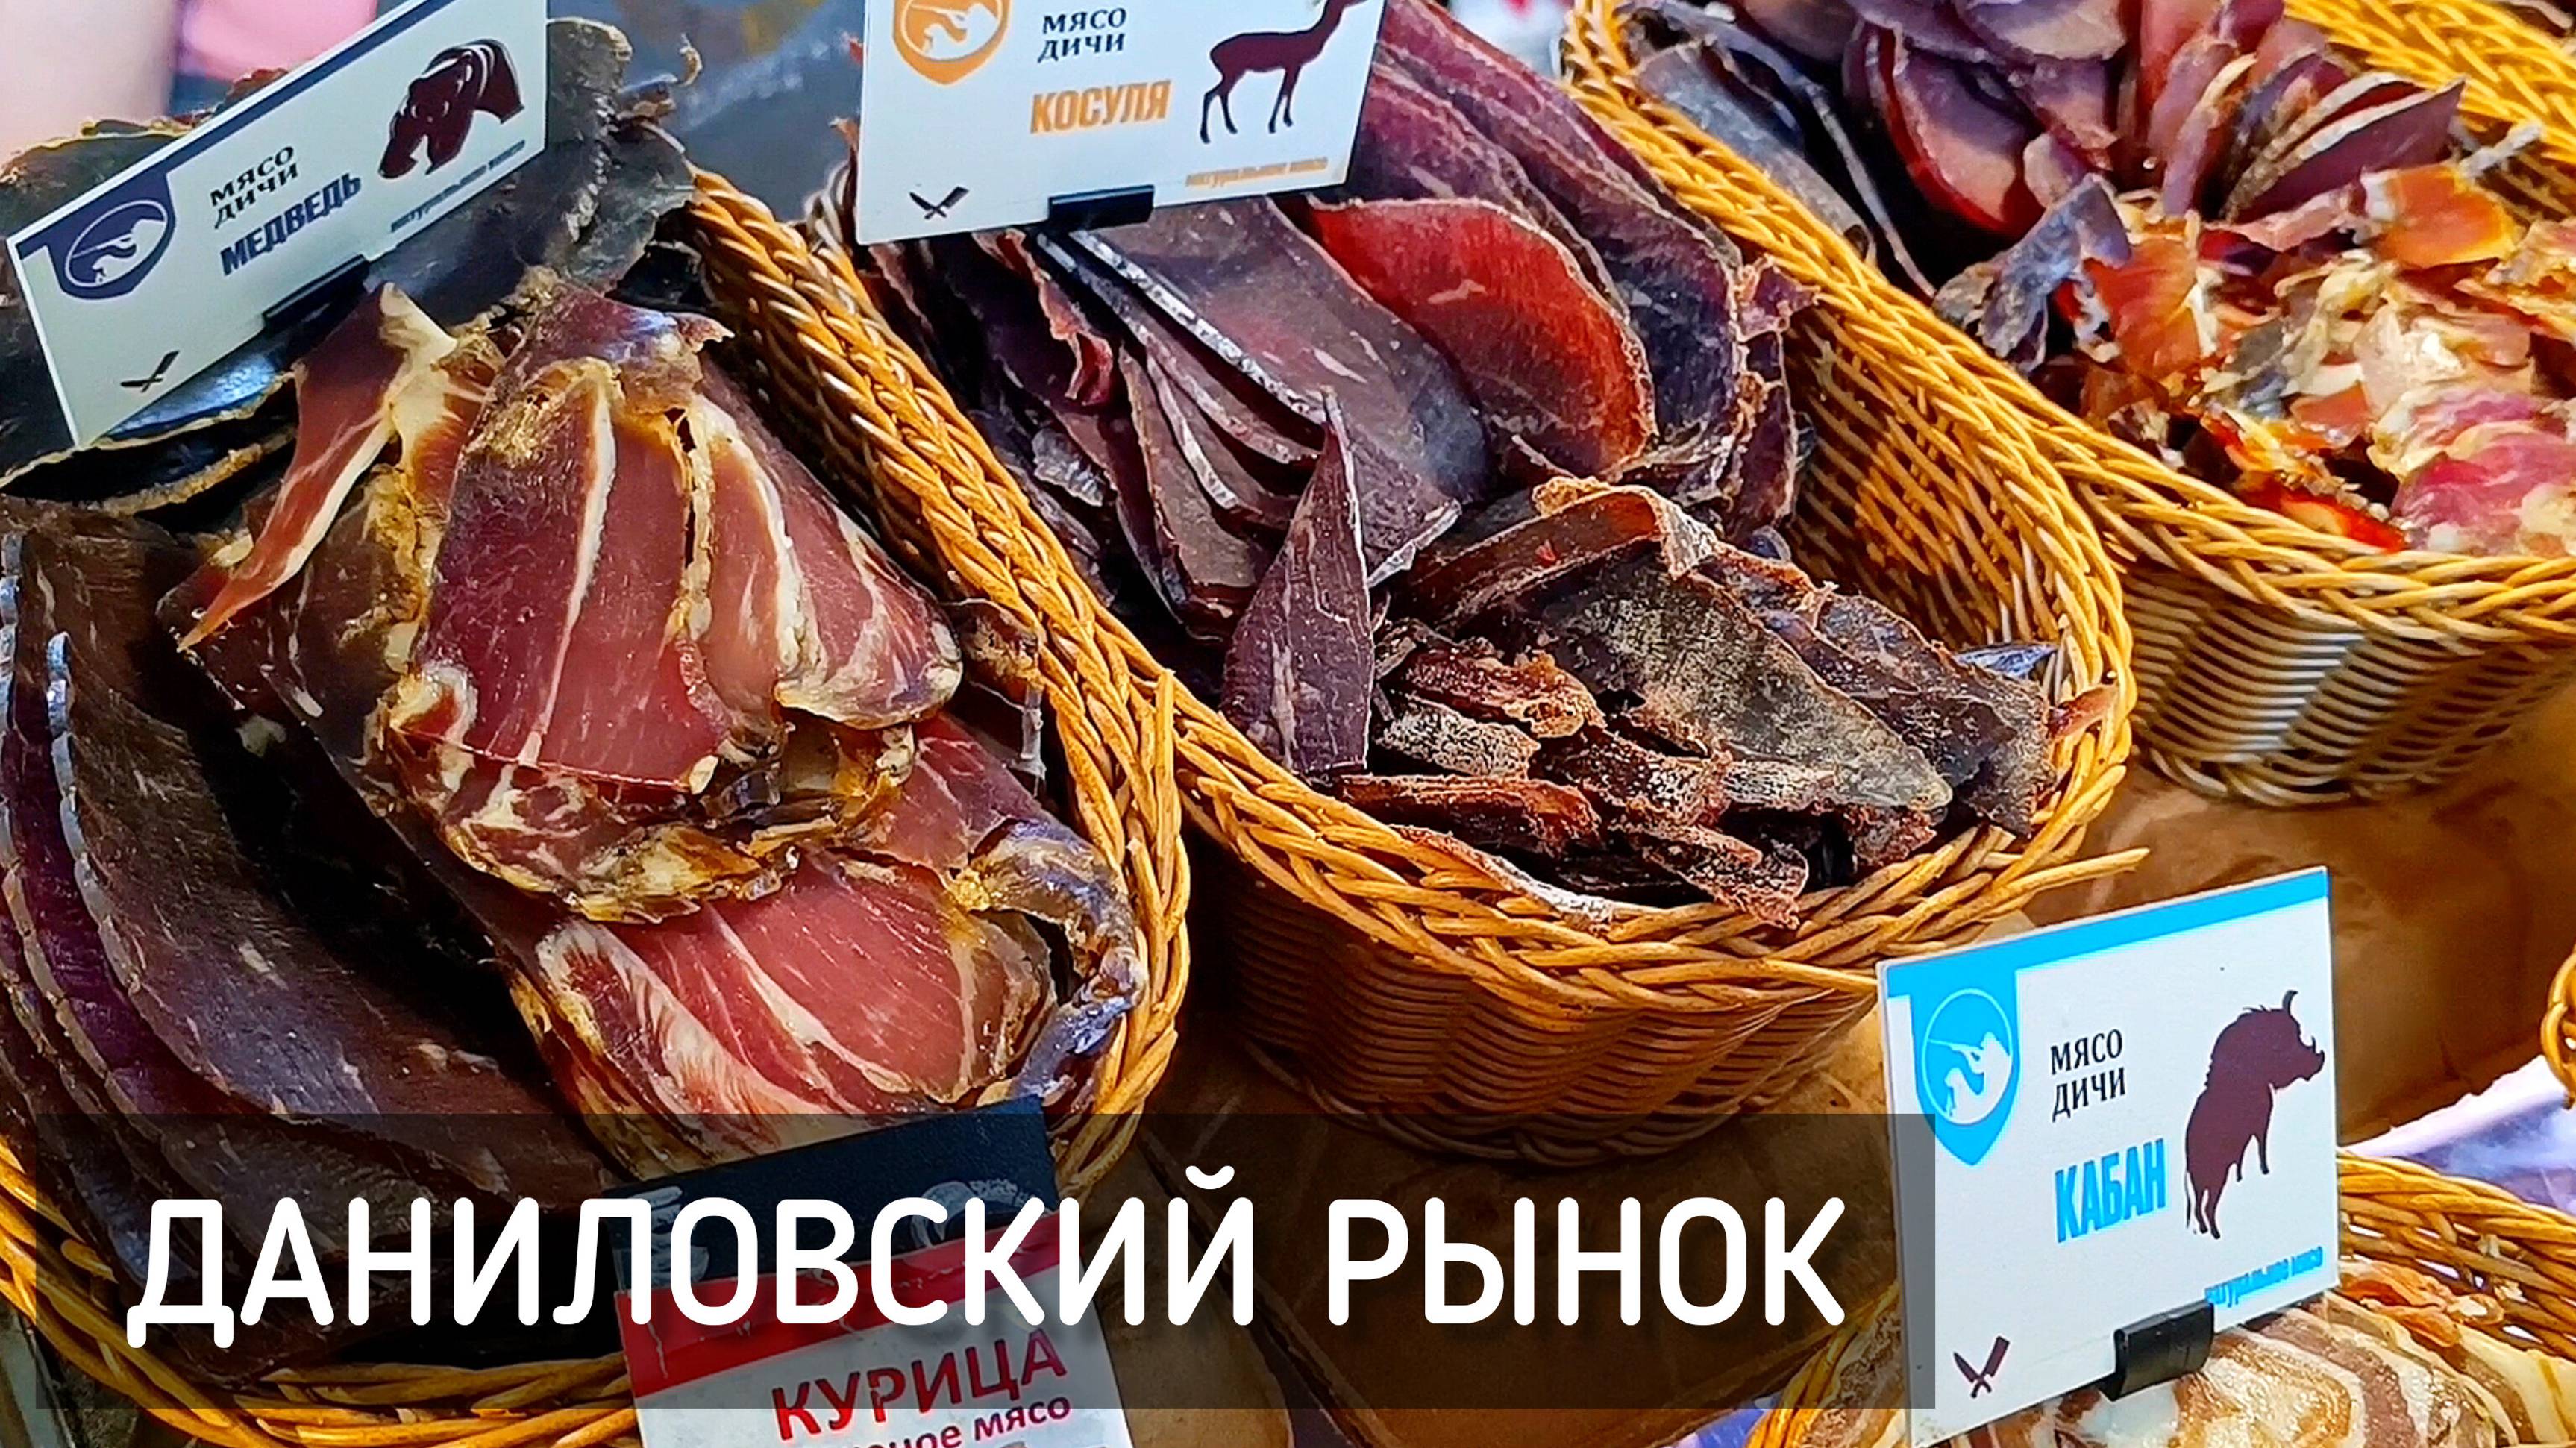 Даниловский рынок. Дегустируем сыр и мясо. Фудкорт / Danilovsky Market. Tasting cheese and meat #еда